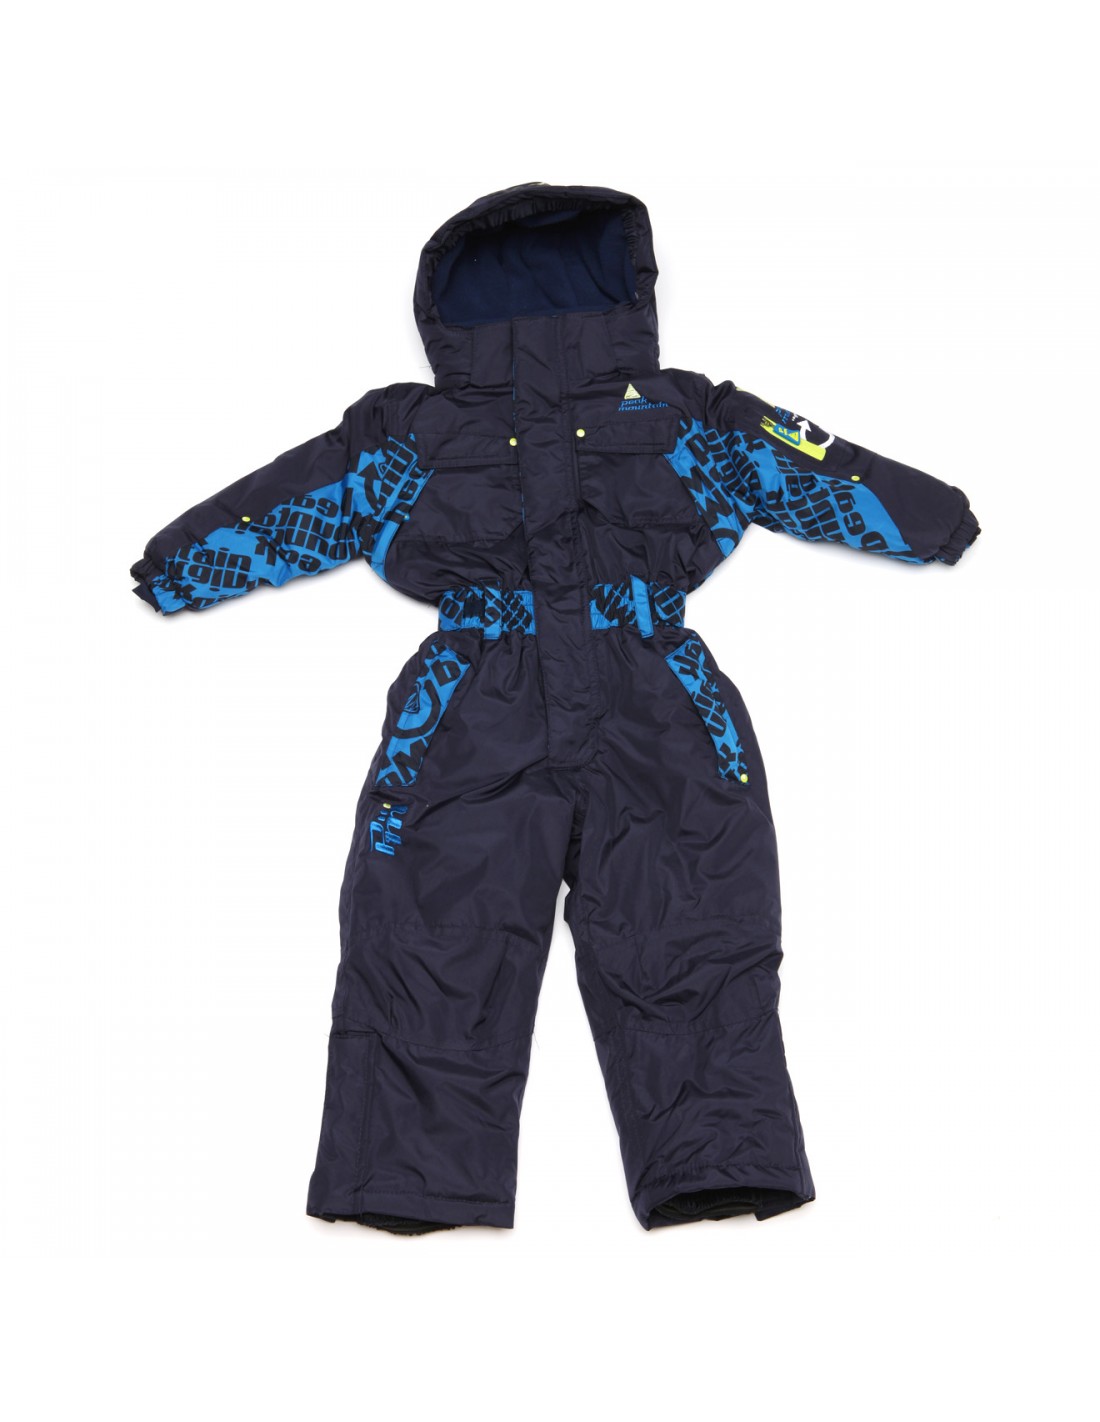 Hyra Garçons Veste MAROON PEAK bleu plomb, Vêtements de ski pour enfants, Vêtements de ski, Ski alpin